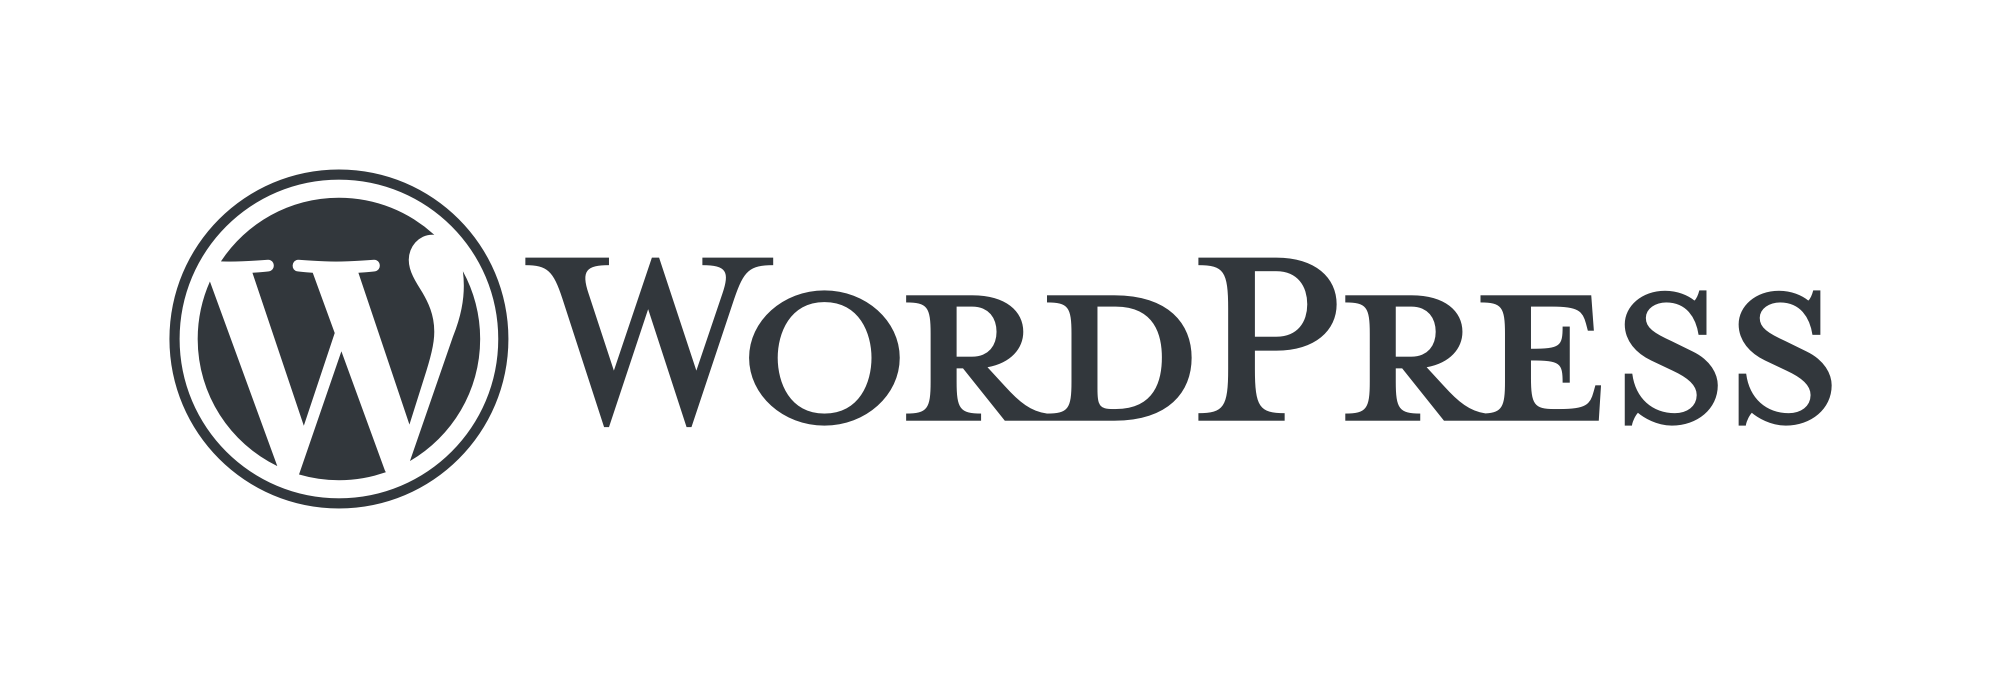 wordpress-partner